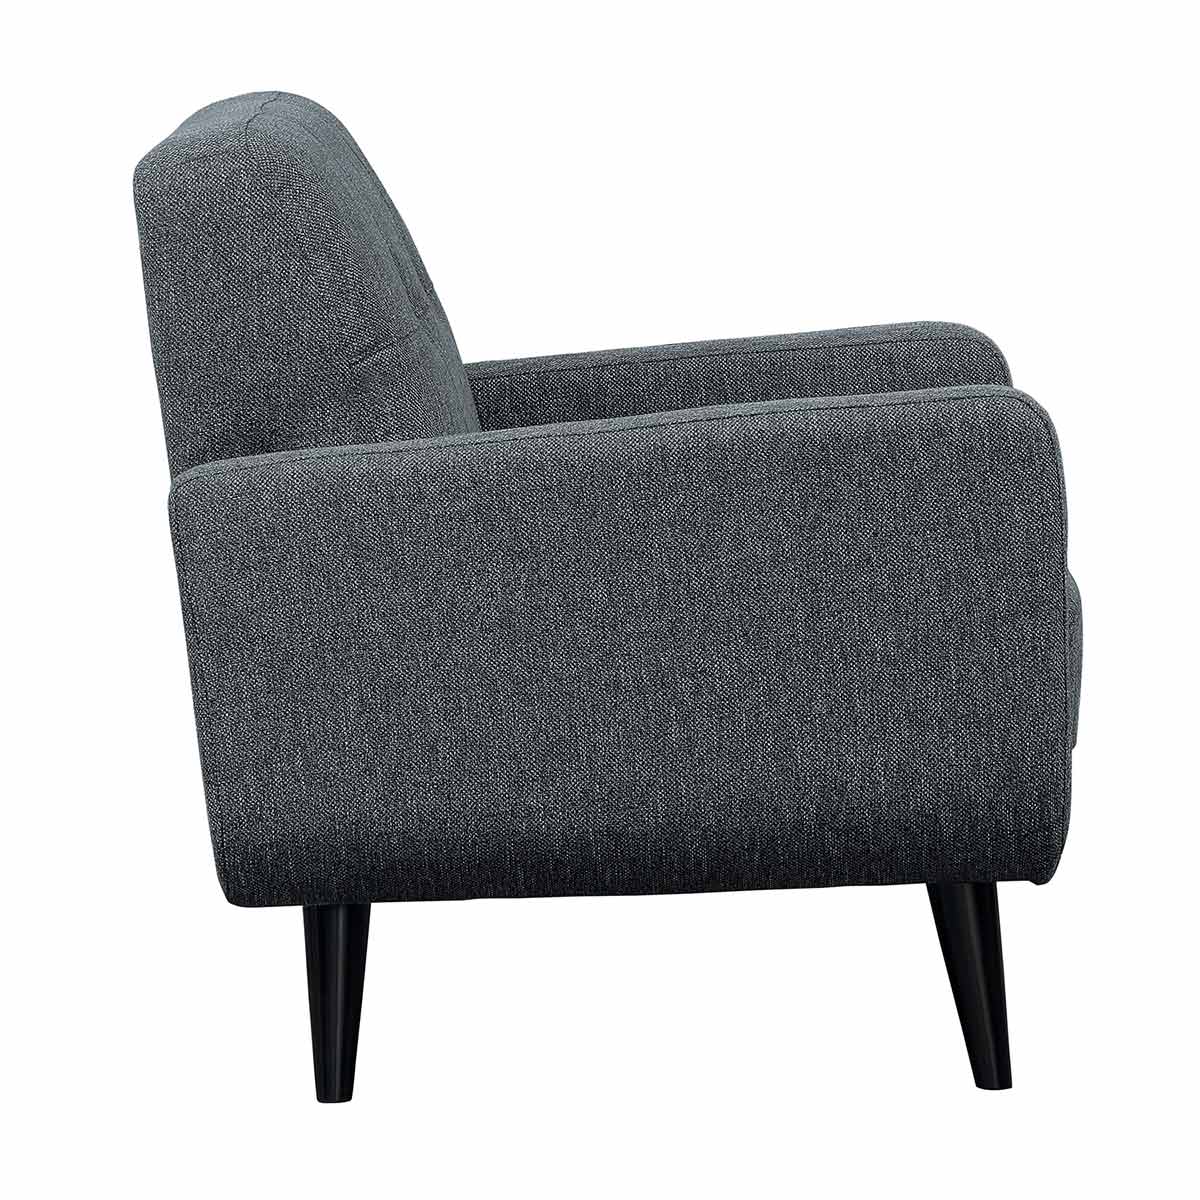 Homelegance Monroe Chair - Gray